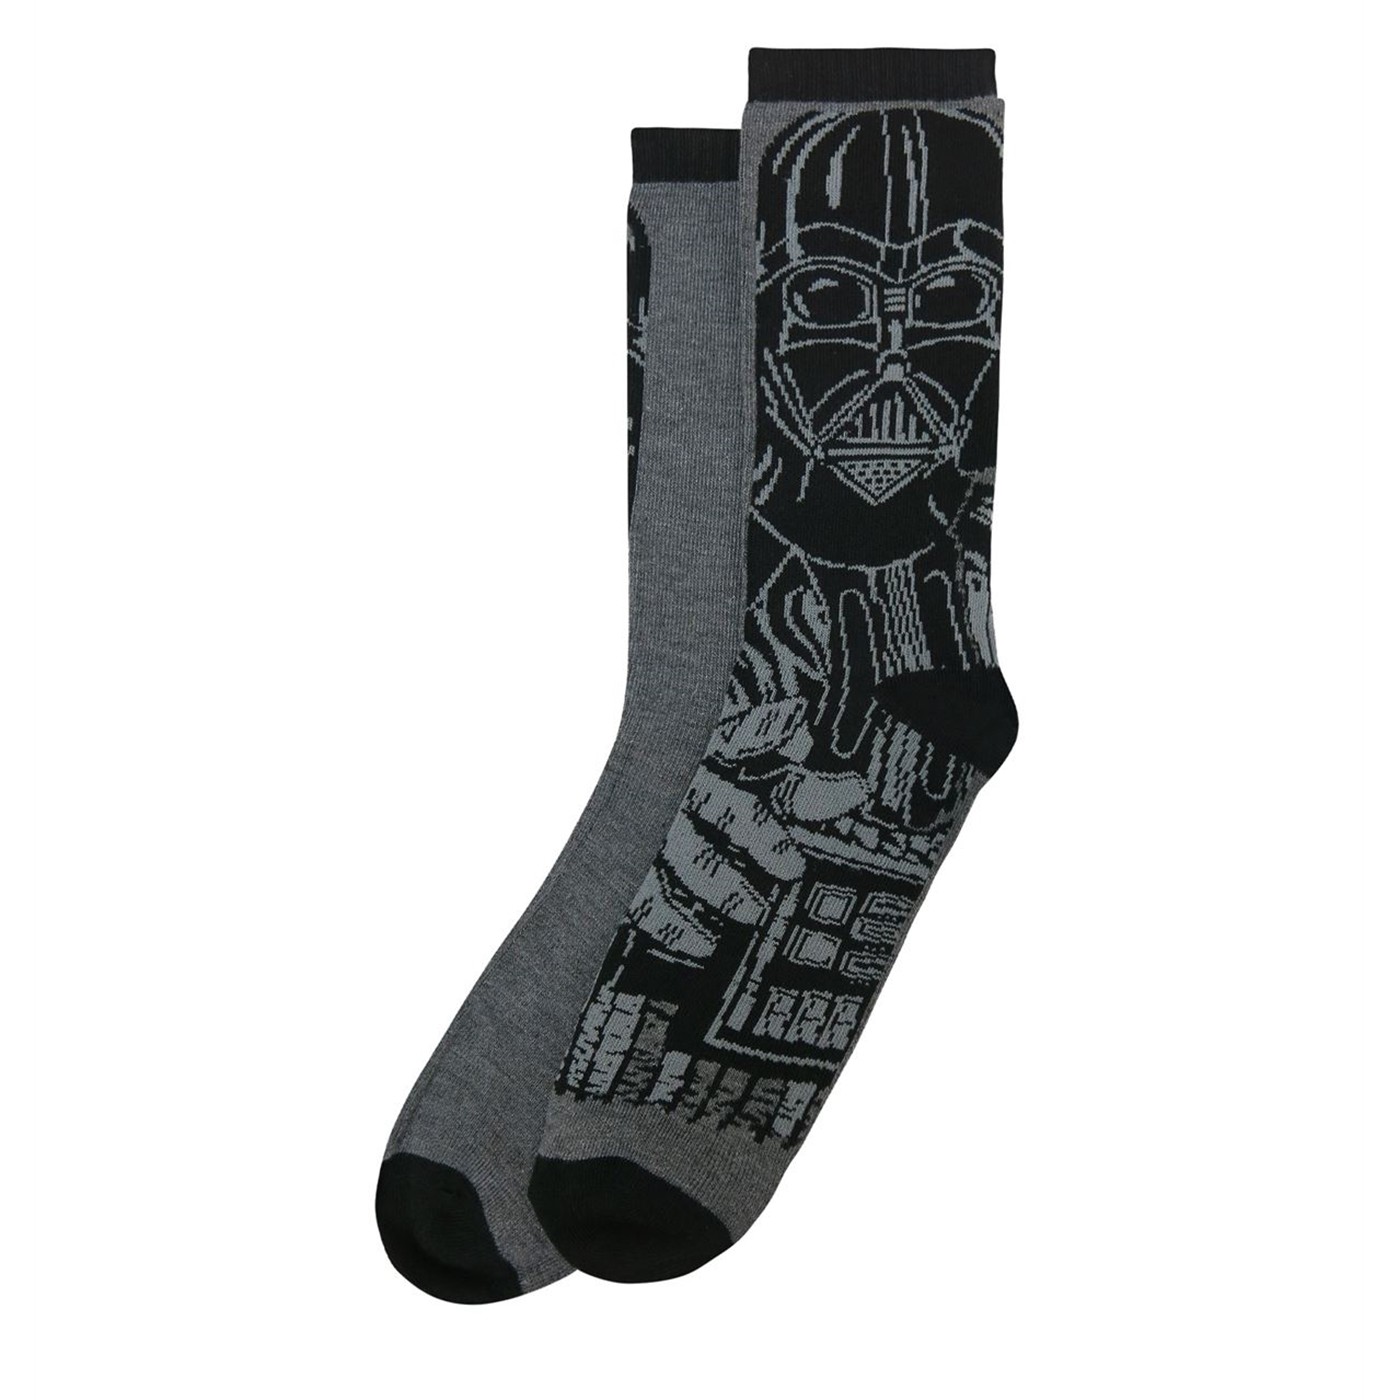 Star Wars Darth Vader and Stormtrooper Sock 2 Pack